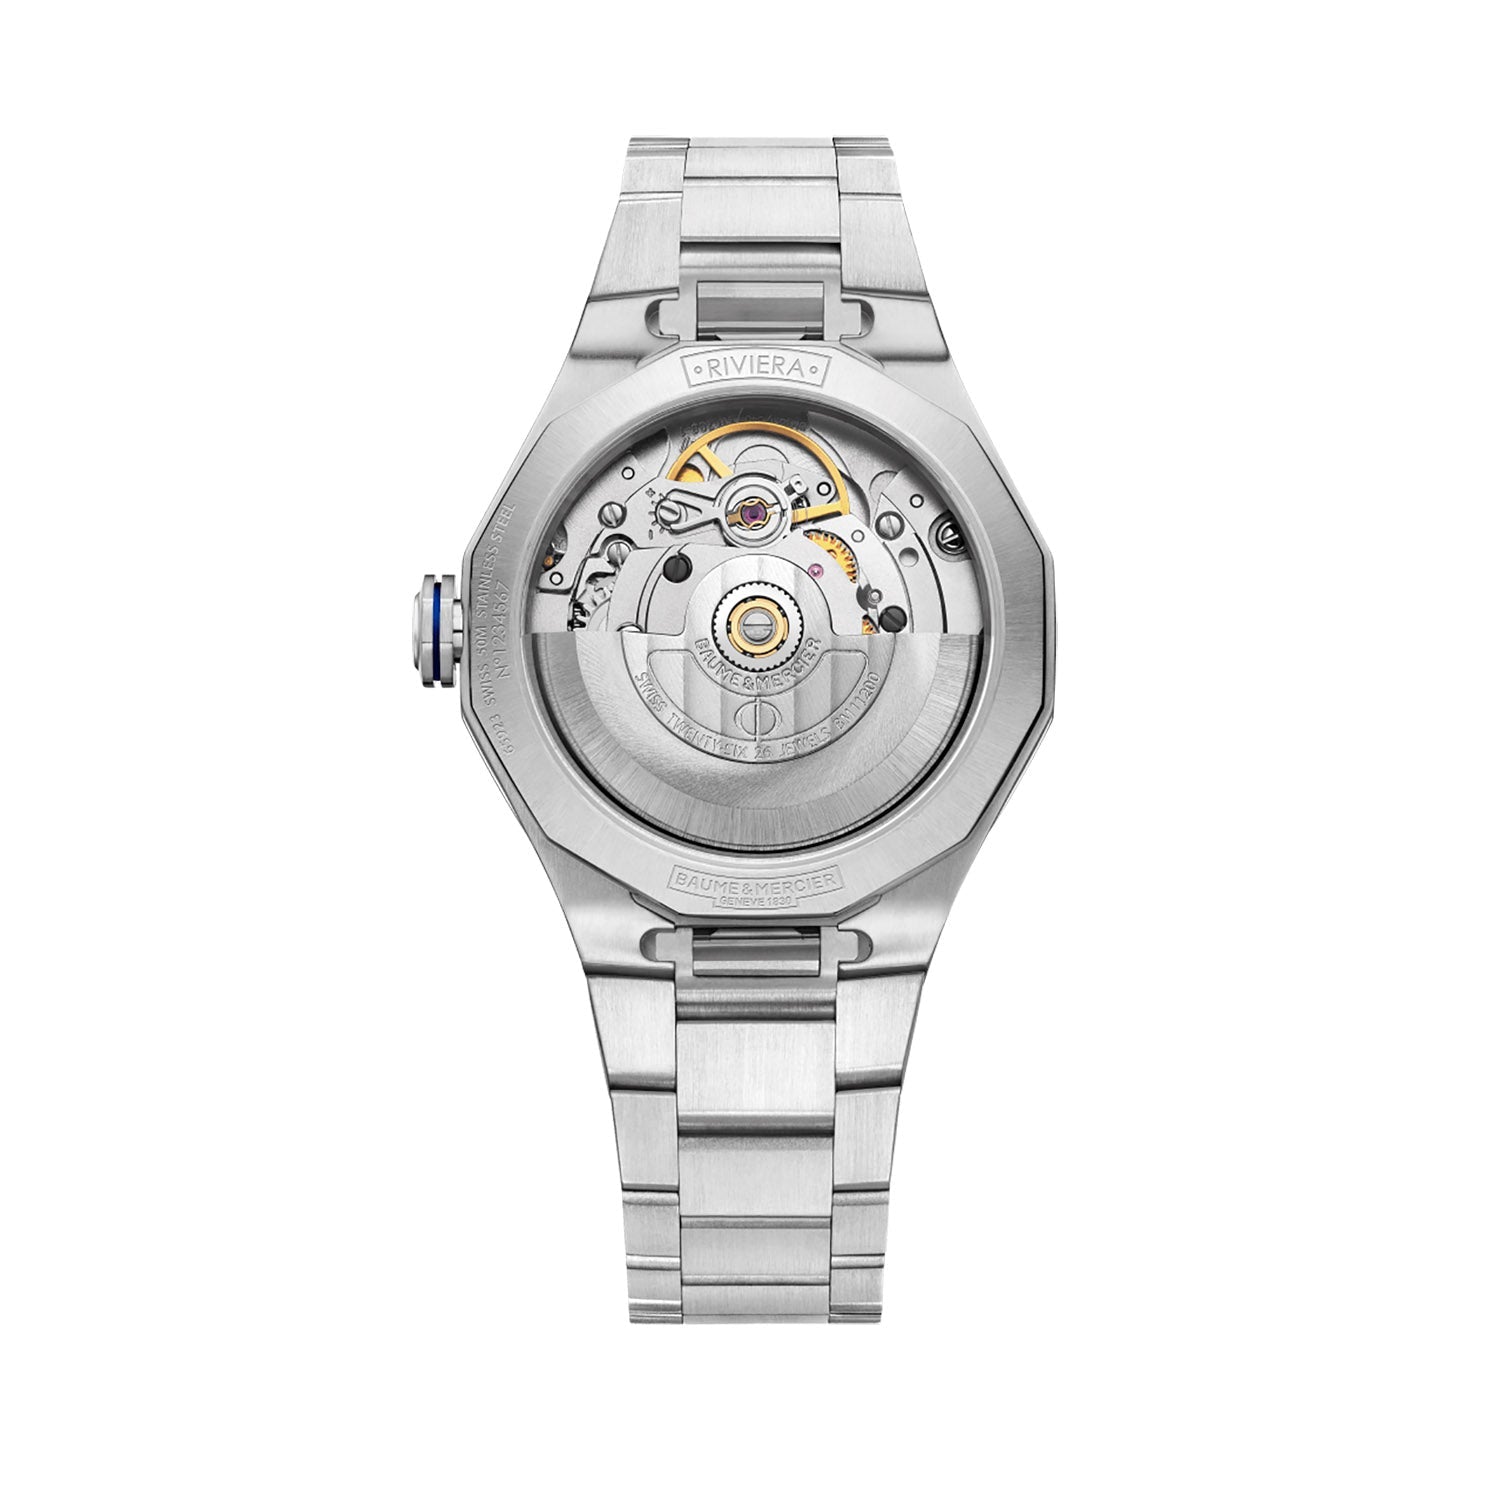 Baume & Mercier Riviera Automatic 33mm Diamond Set Watch M0A10677